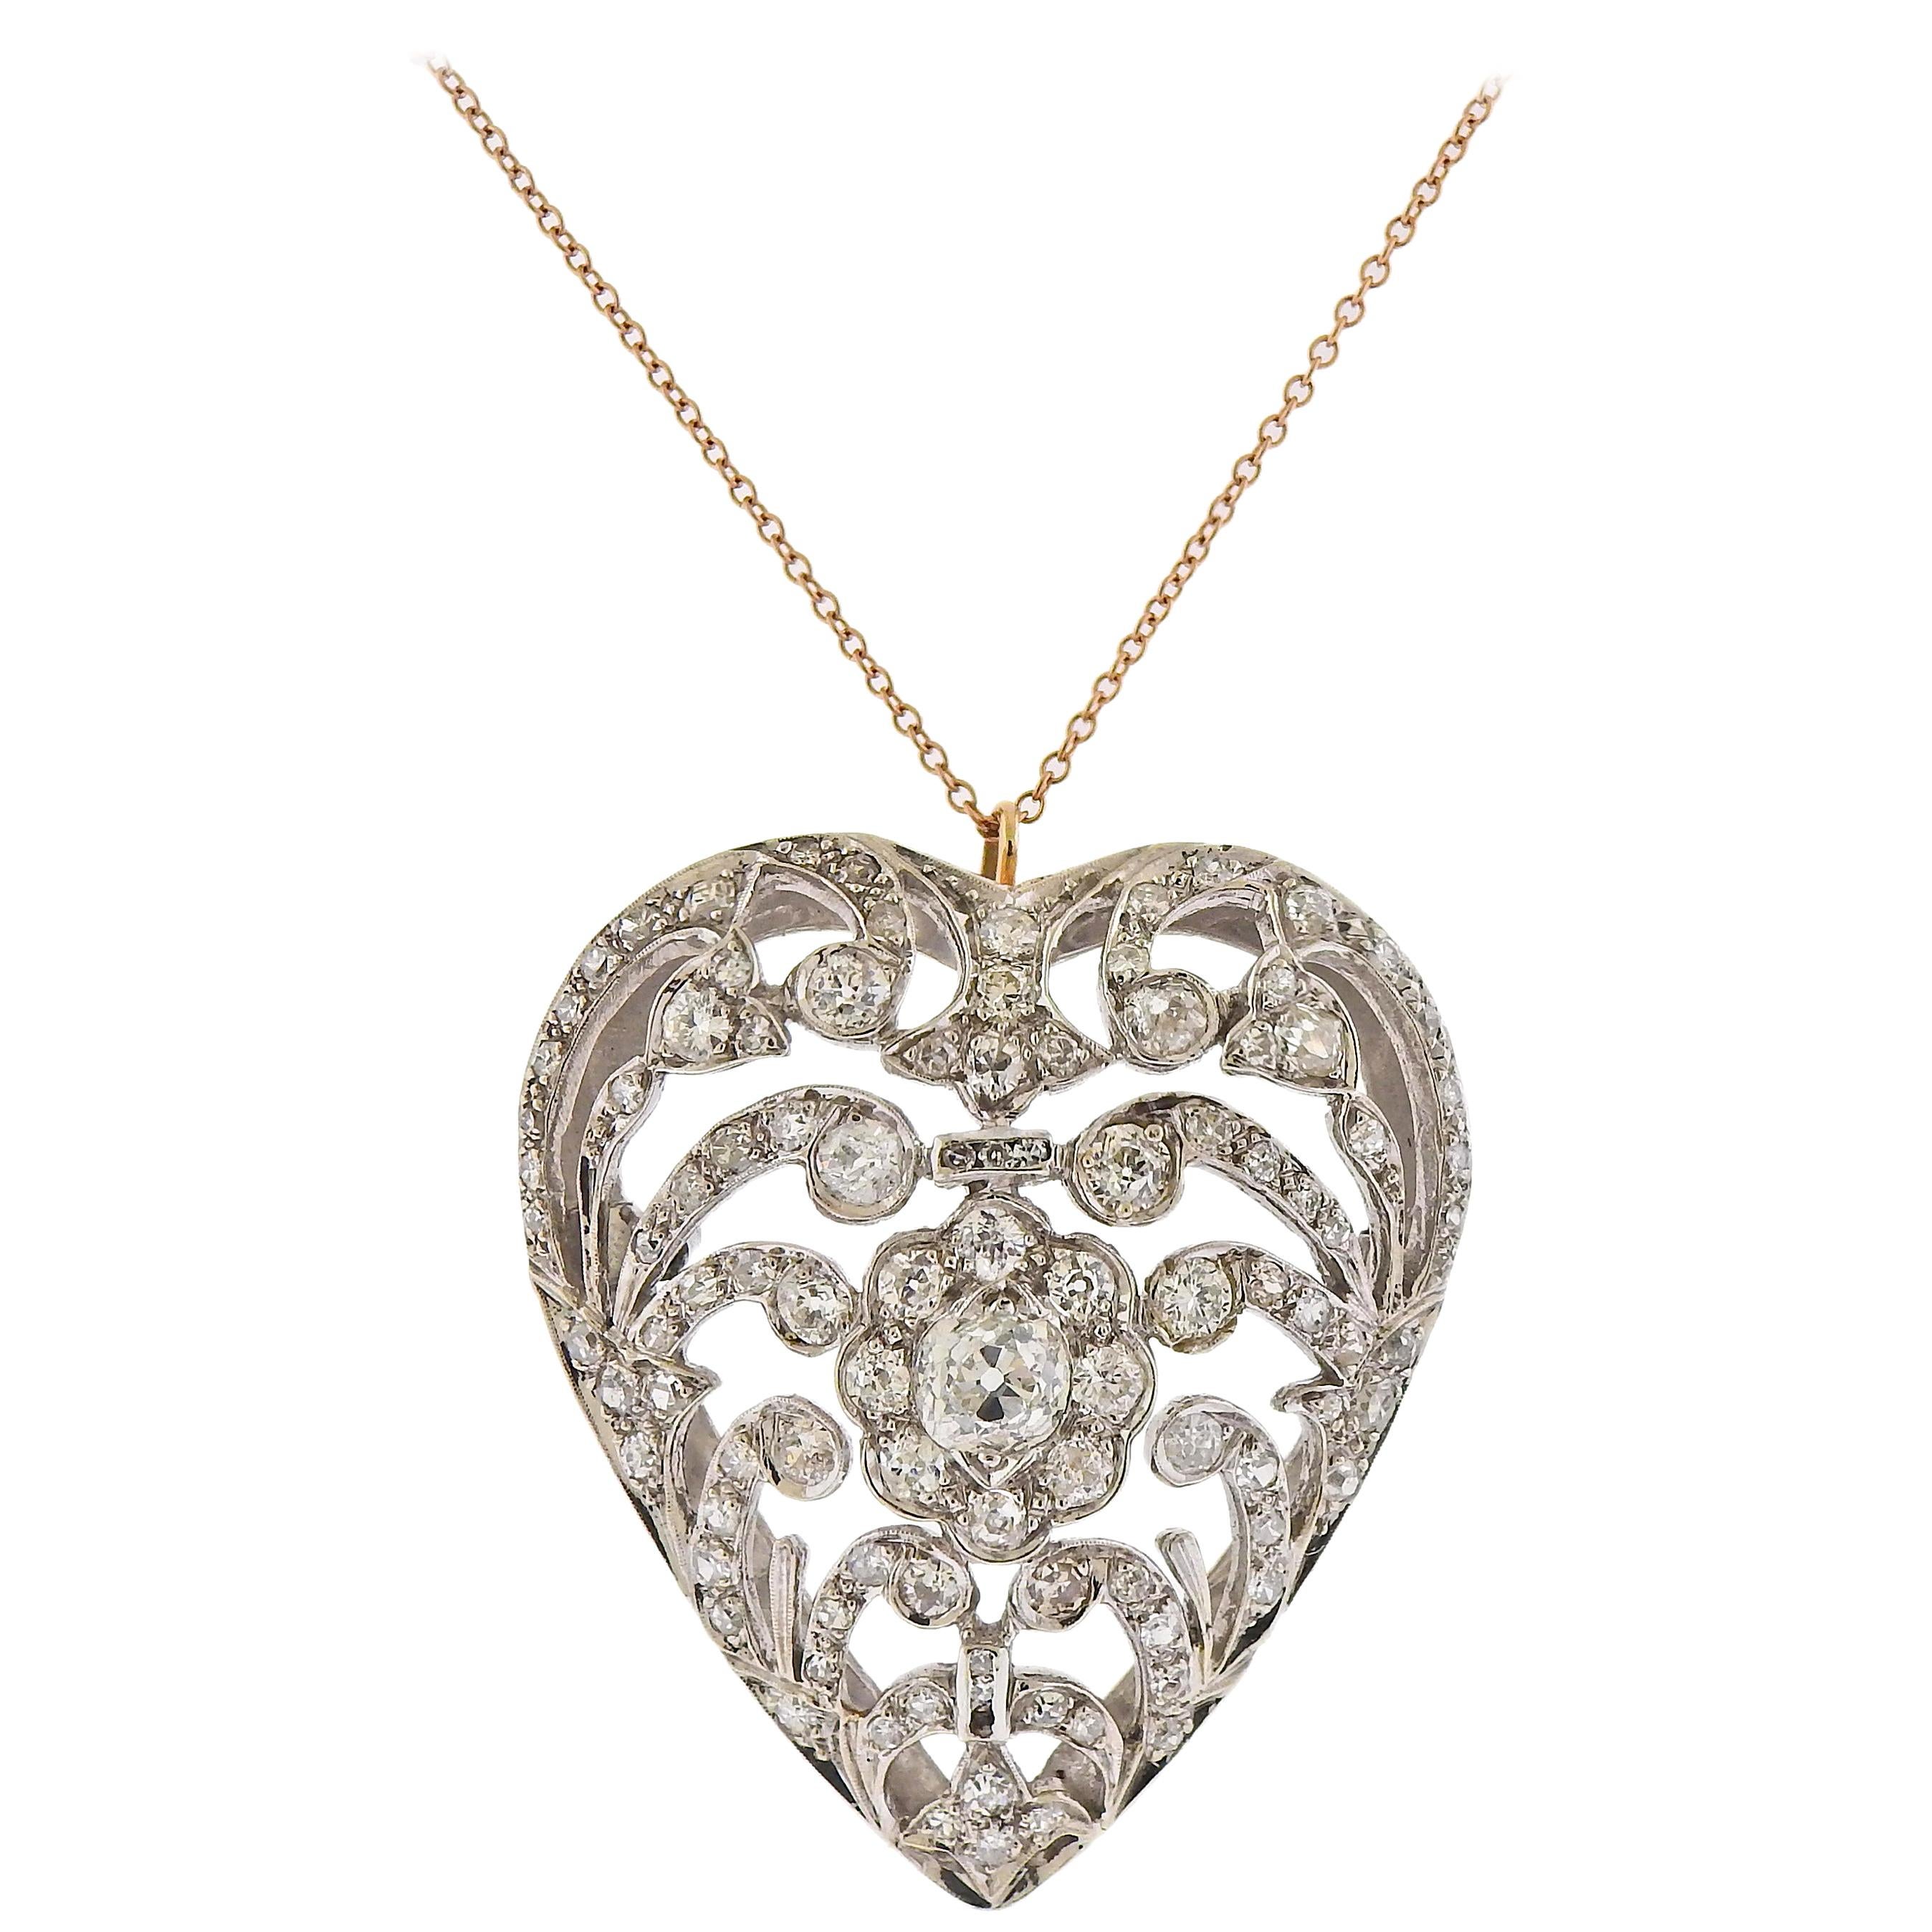 Antique Edwardian Diamond Gold Heart Pendant on Tiffany & Co Chain Necklace